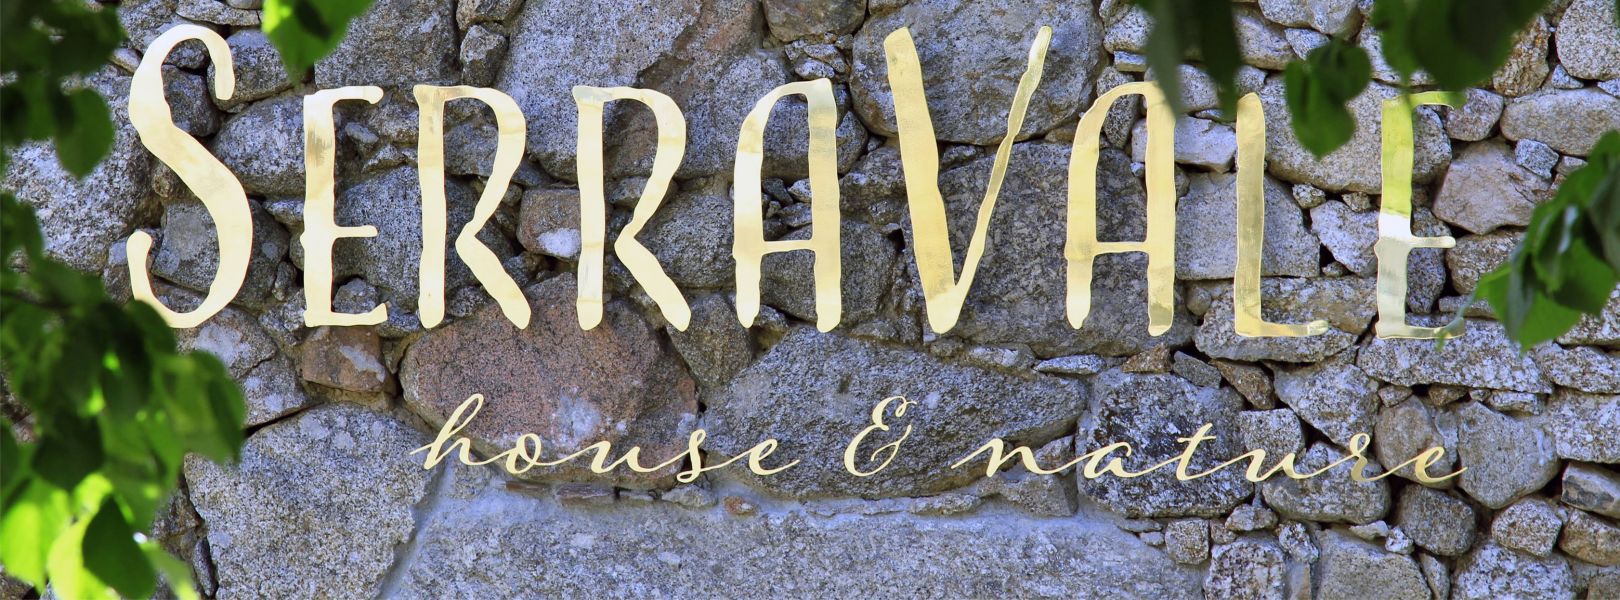 SerraVale - House & Nature